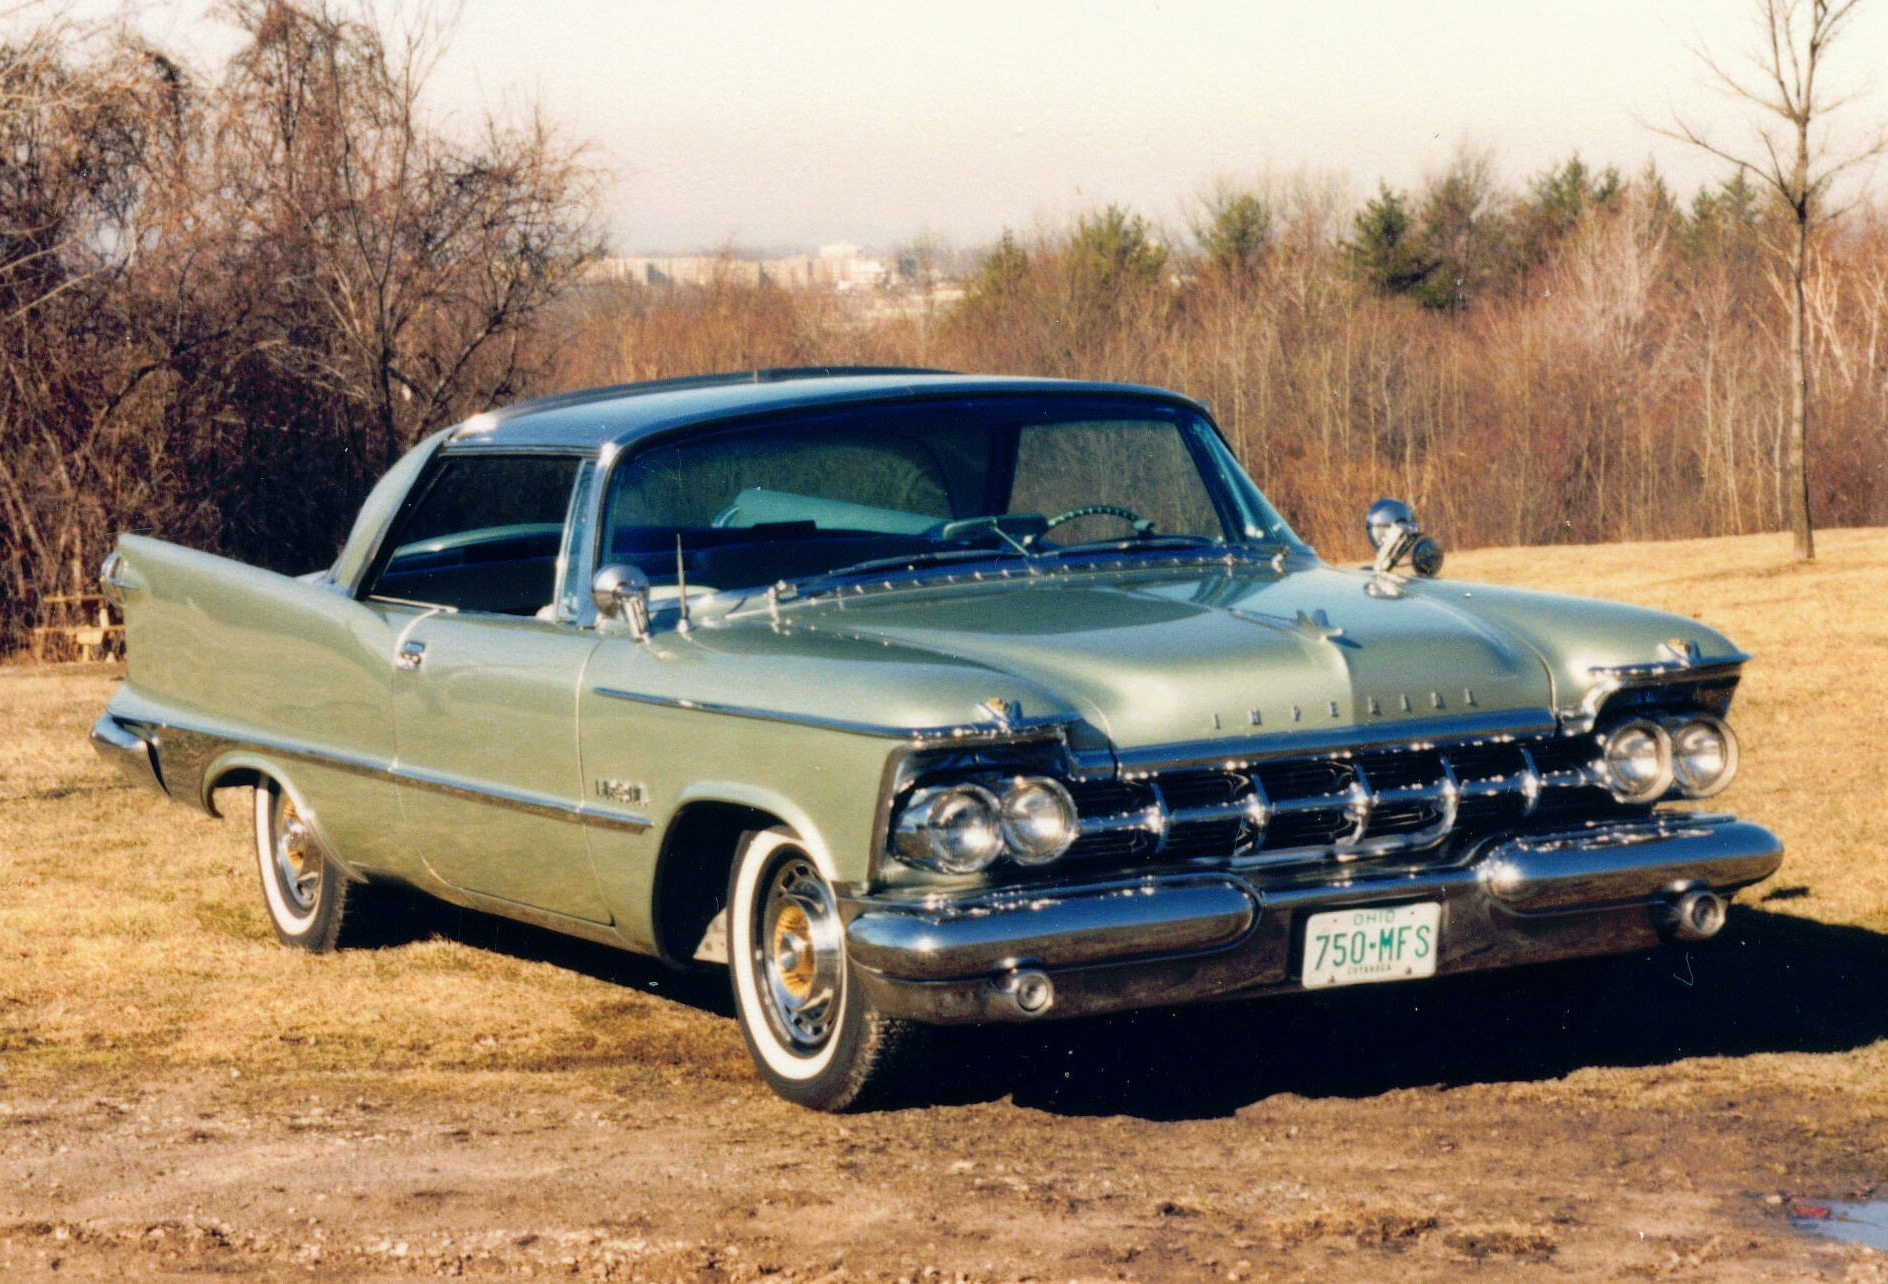 1966 Chrysler Imperial Imperials picture SuperMotorsnet